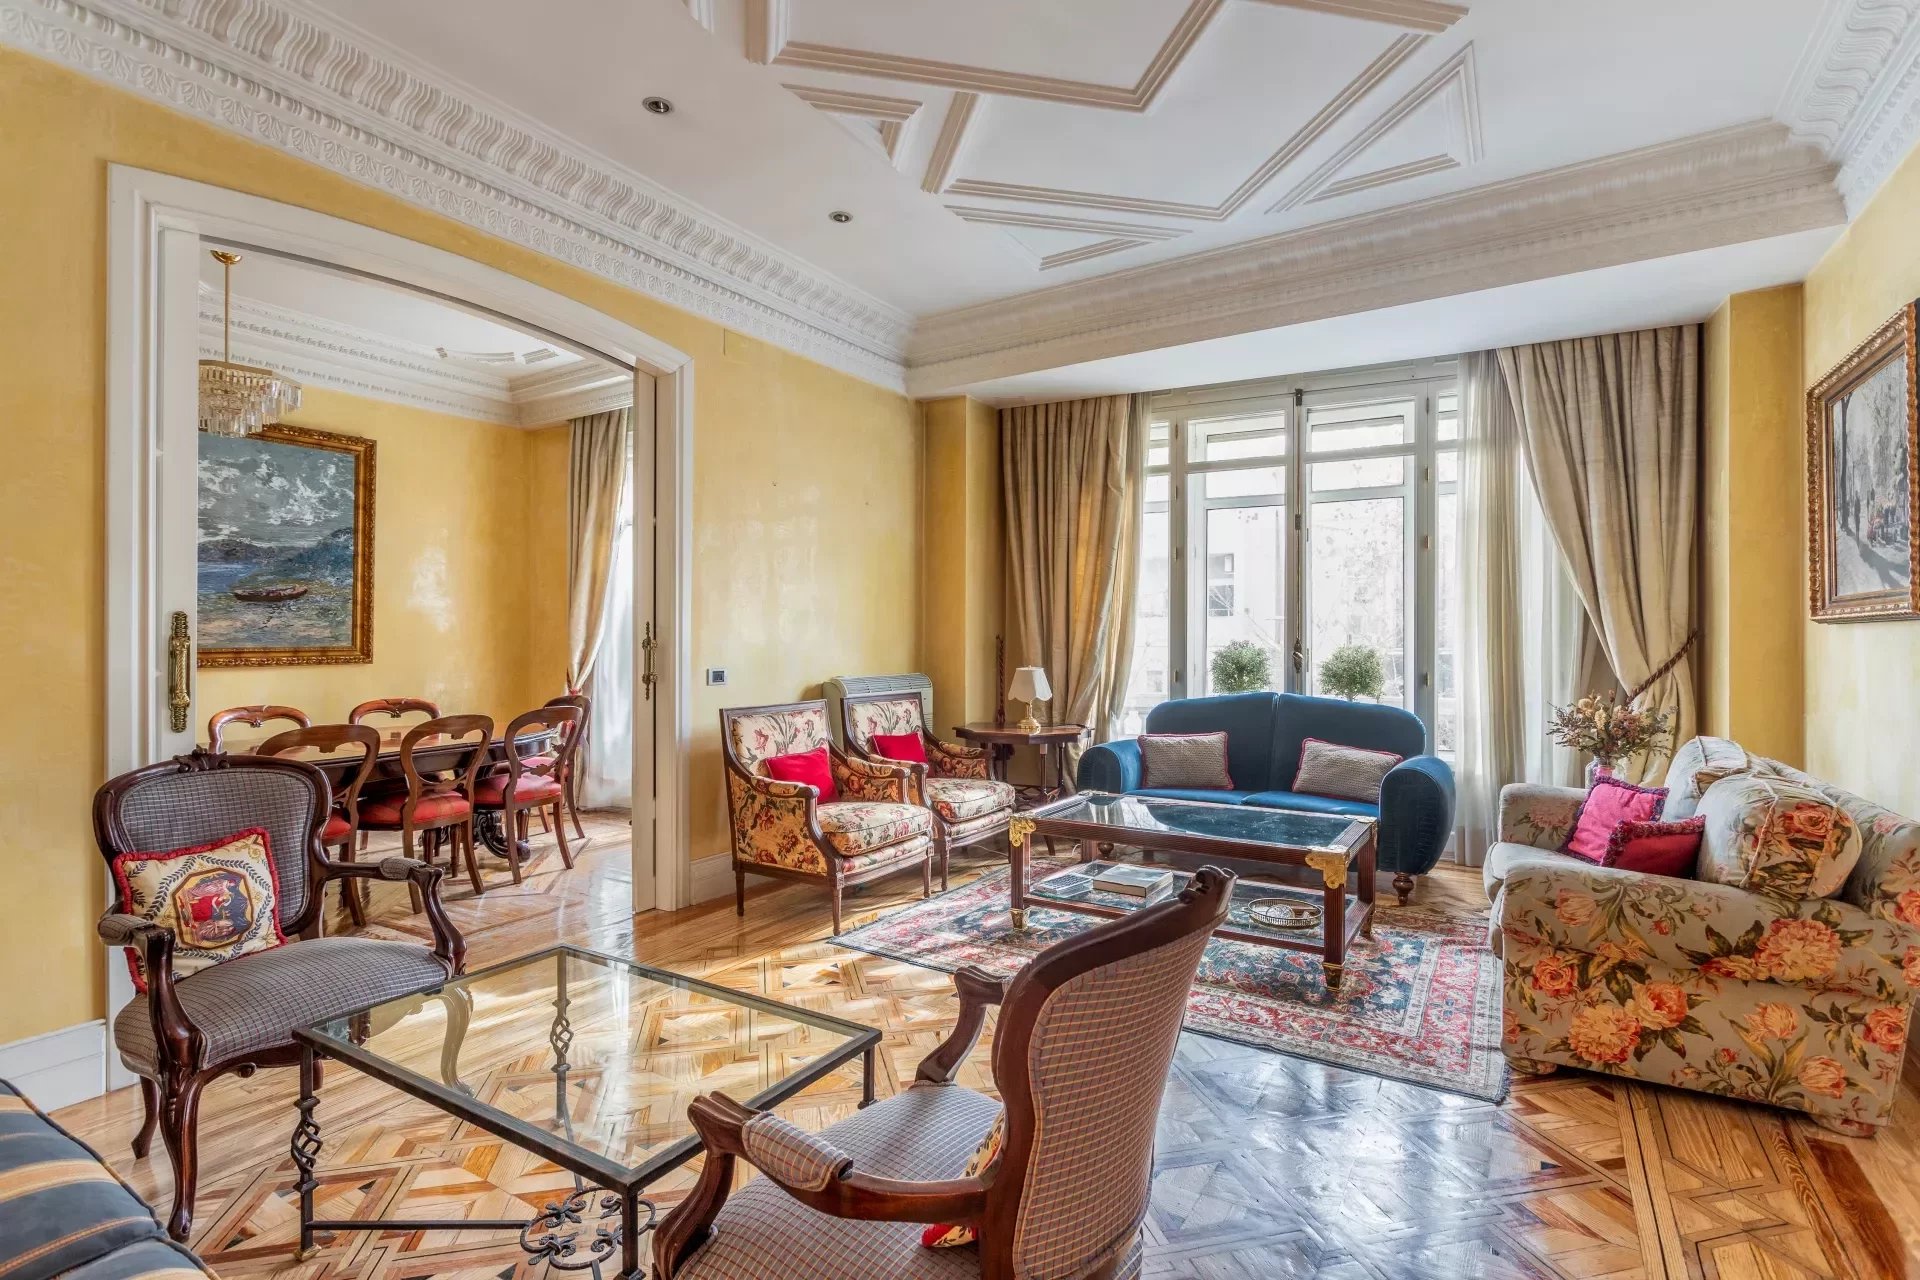 Exclusive apartment in the prestigious area of Almagro, Madrid - picture 11 title=